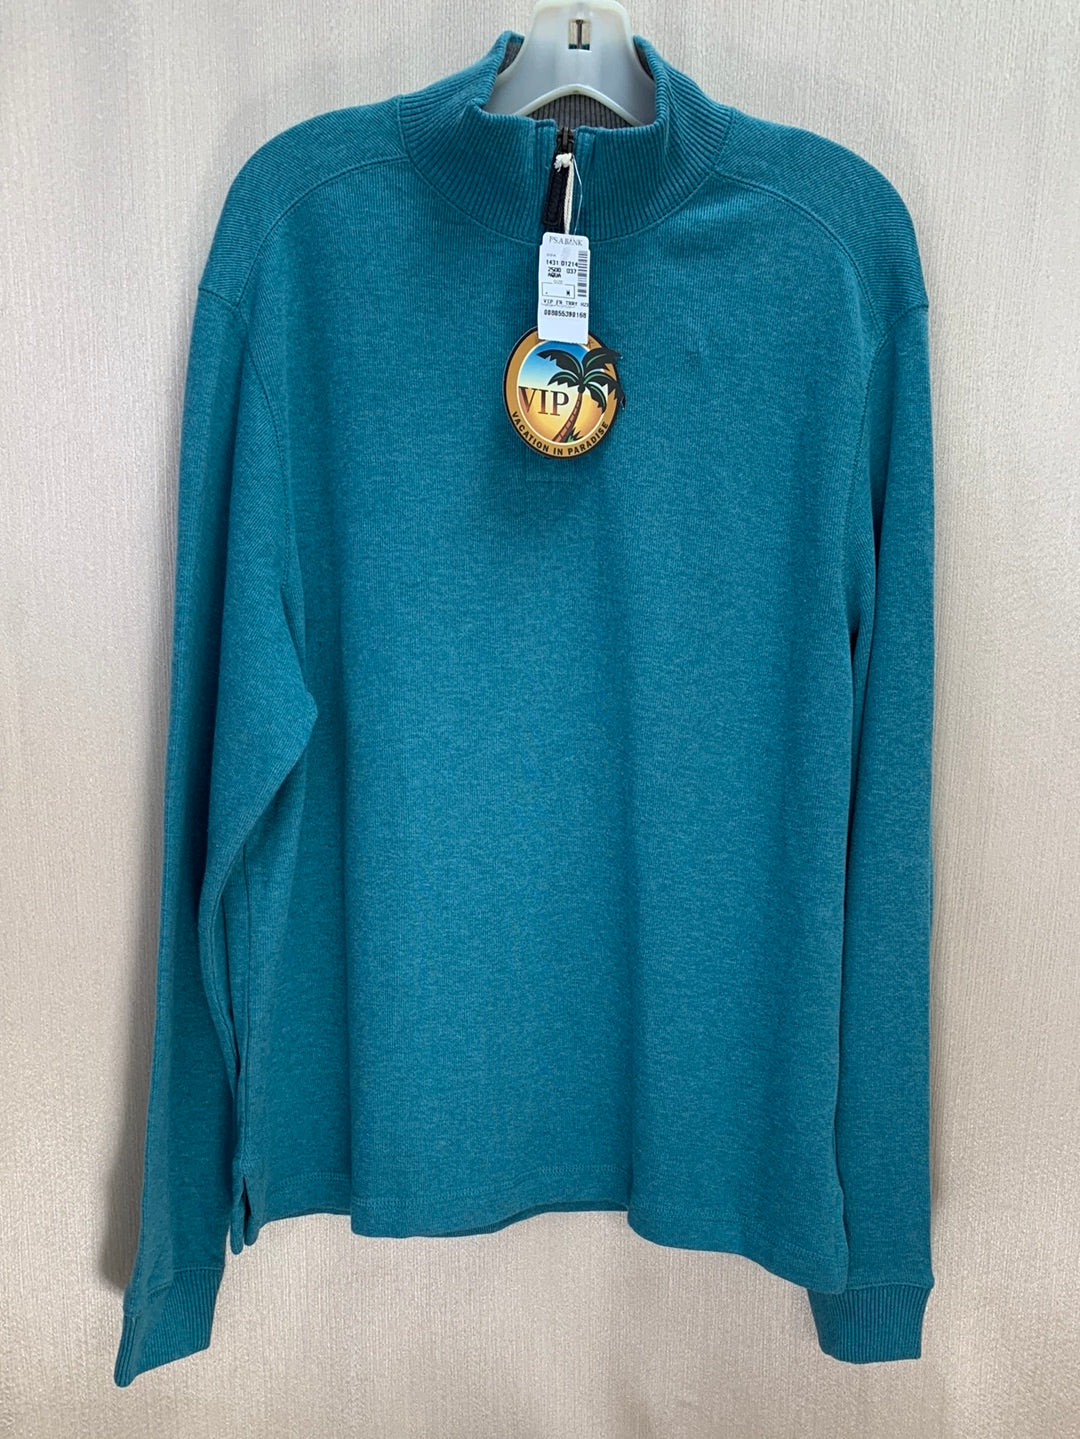 NWT - JOS A BANK aqua blue 100% Cotton 1/4 Zip Sweater - M